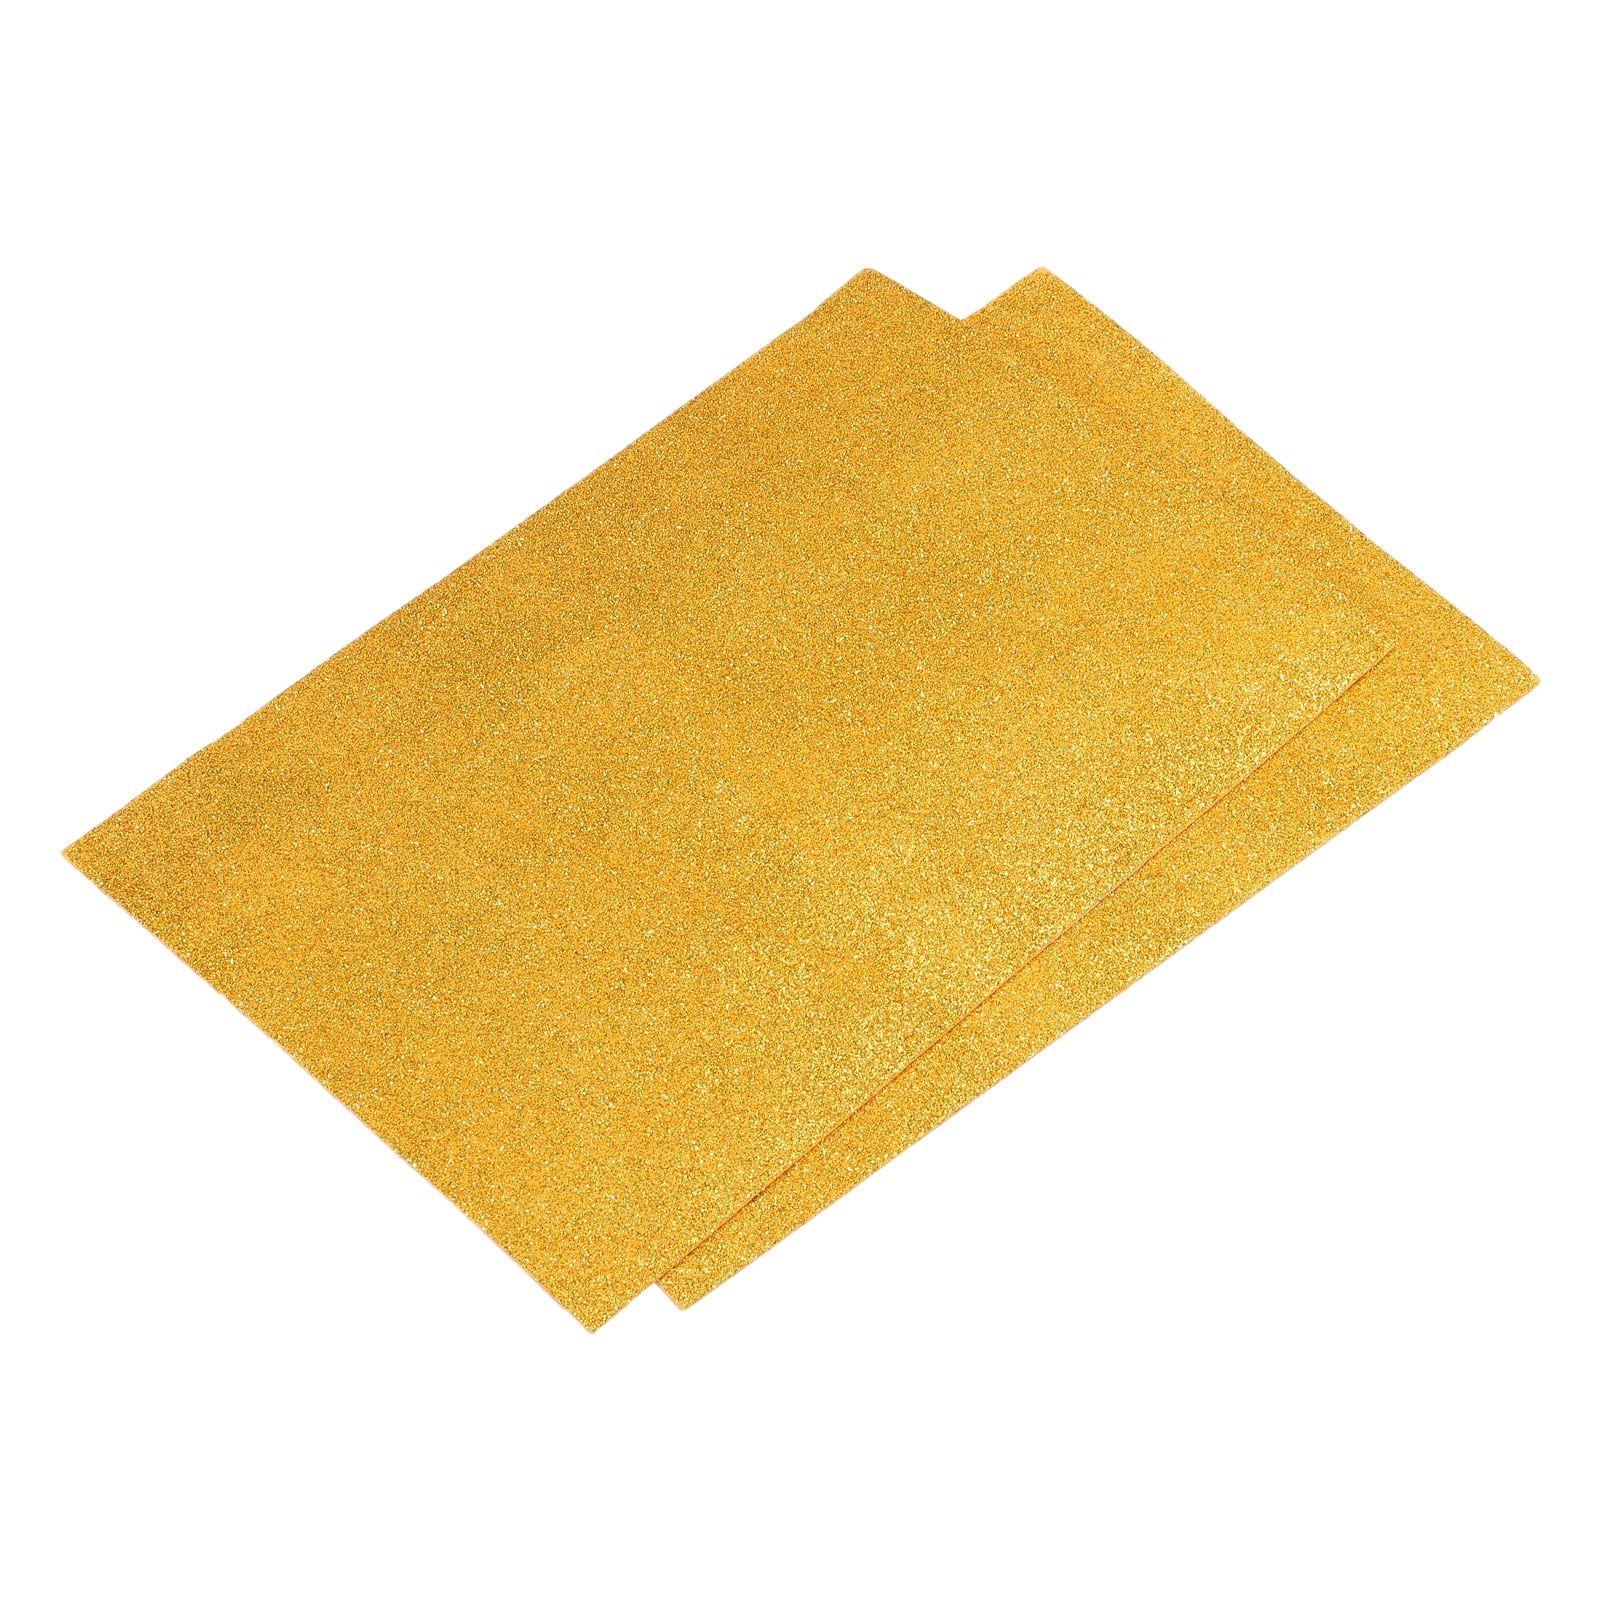  Amylove Polyethylene Foam Sheet Foam Pad for Case